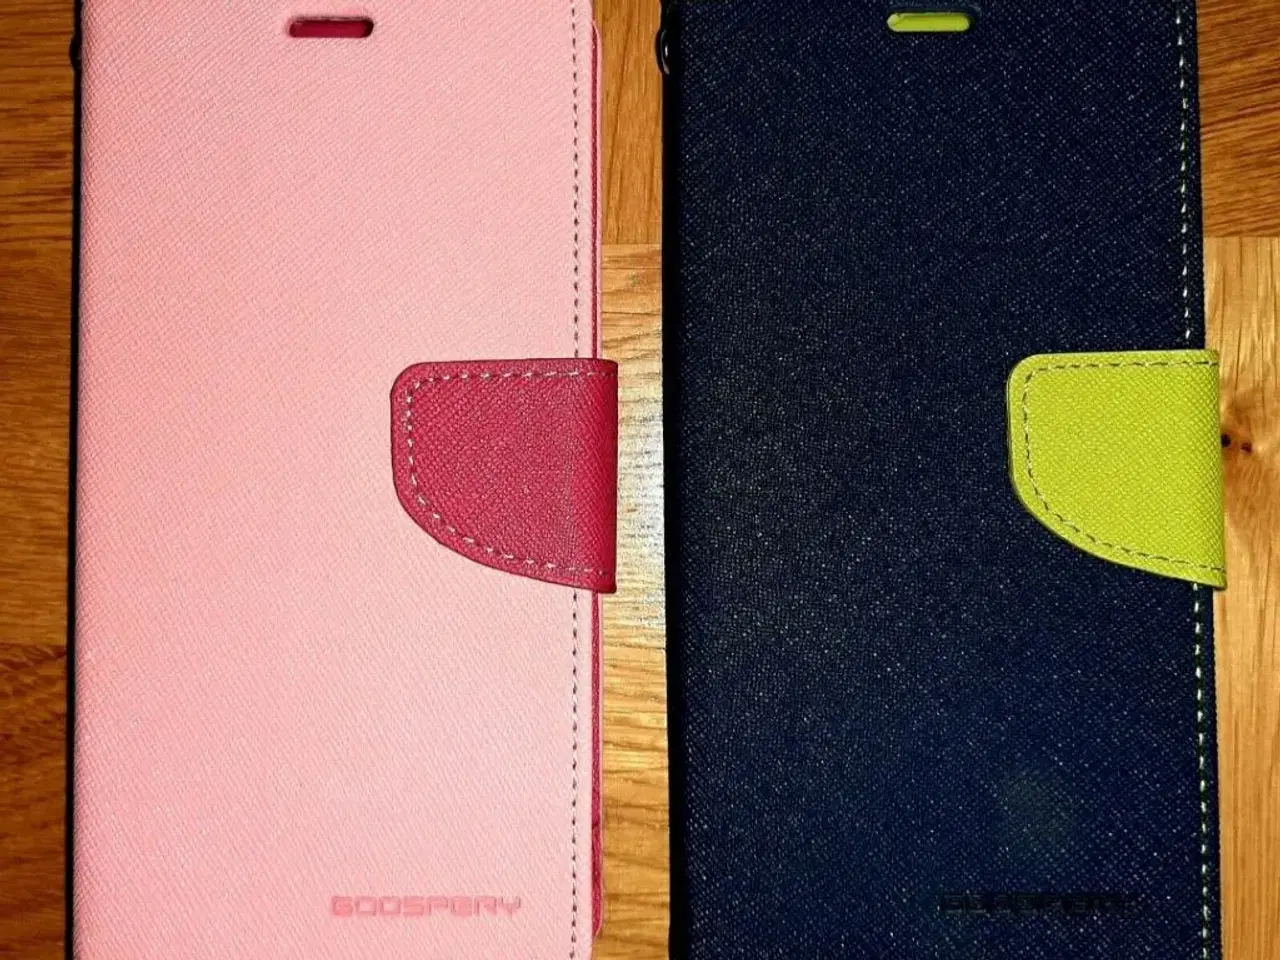 Billede 1 - Nye Goospery covers til Sony Xperia Z1